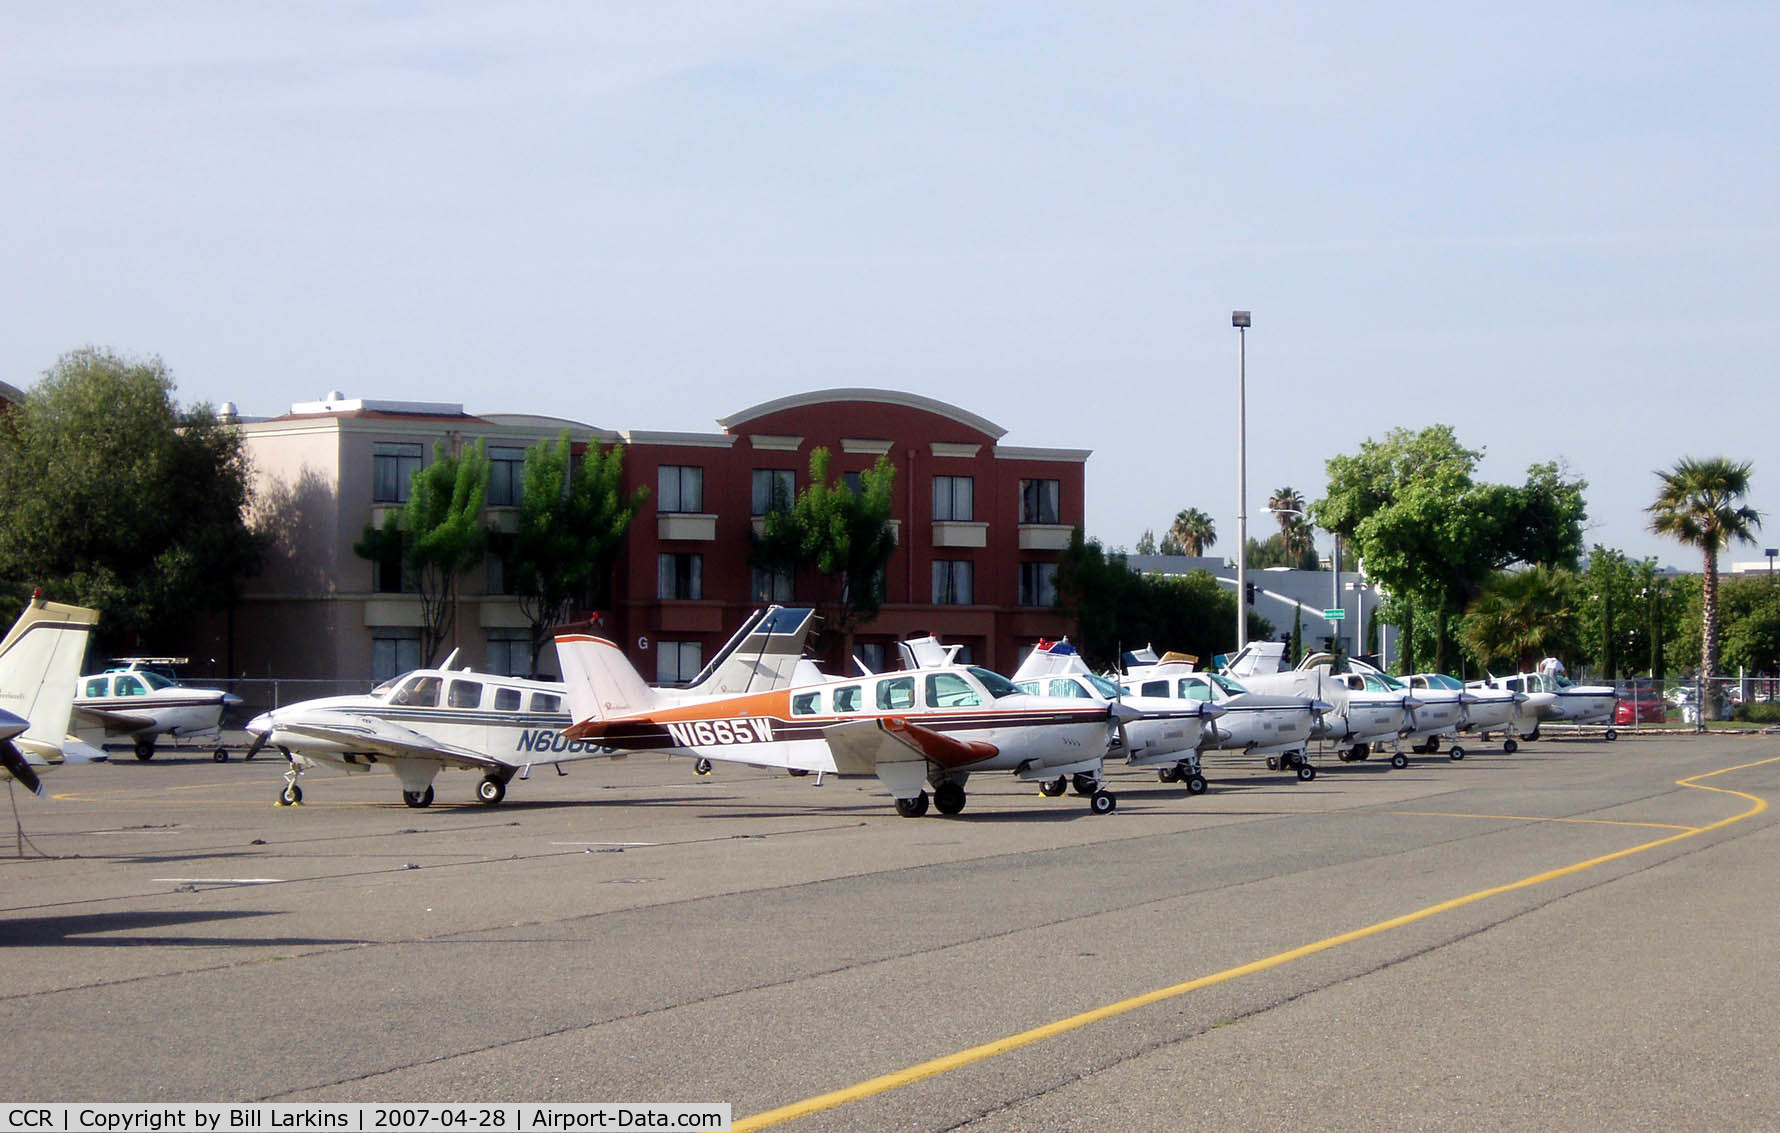 Buchanan Field Airport (CCR) - Beech aircraft and Crowne Plaza Hotel